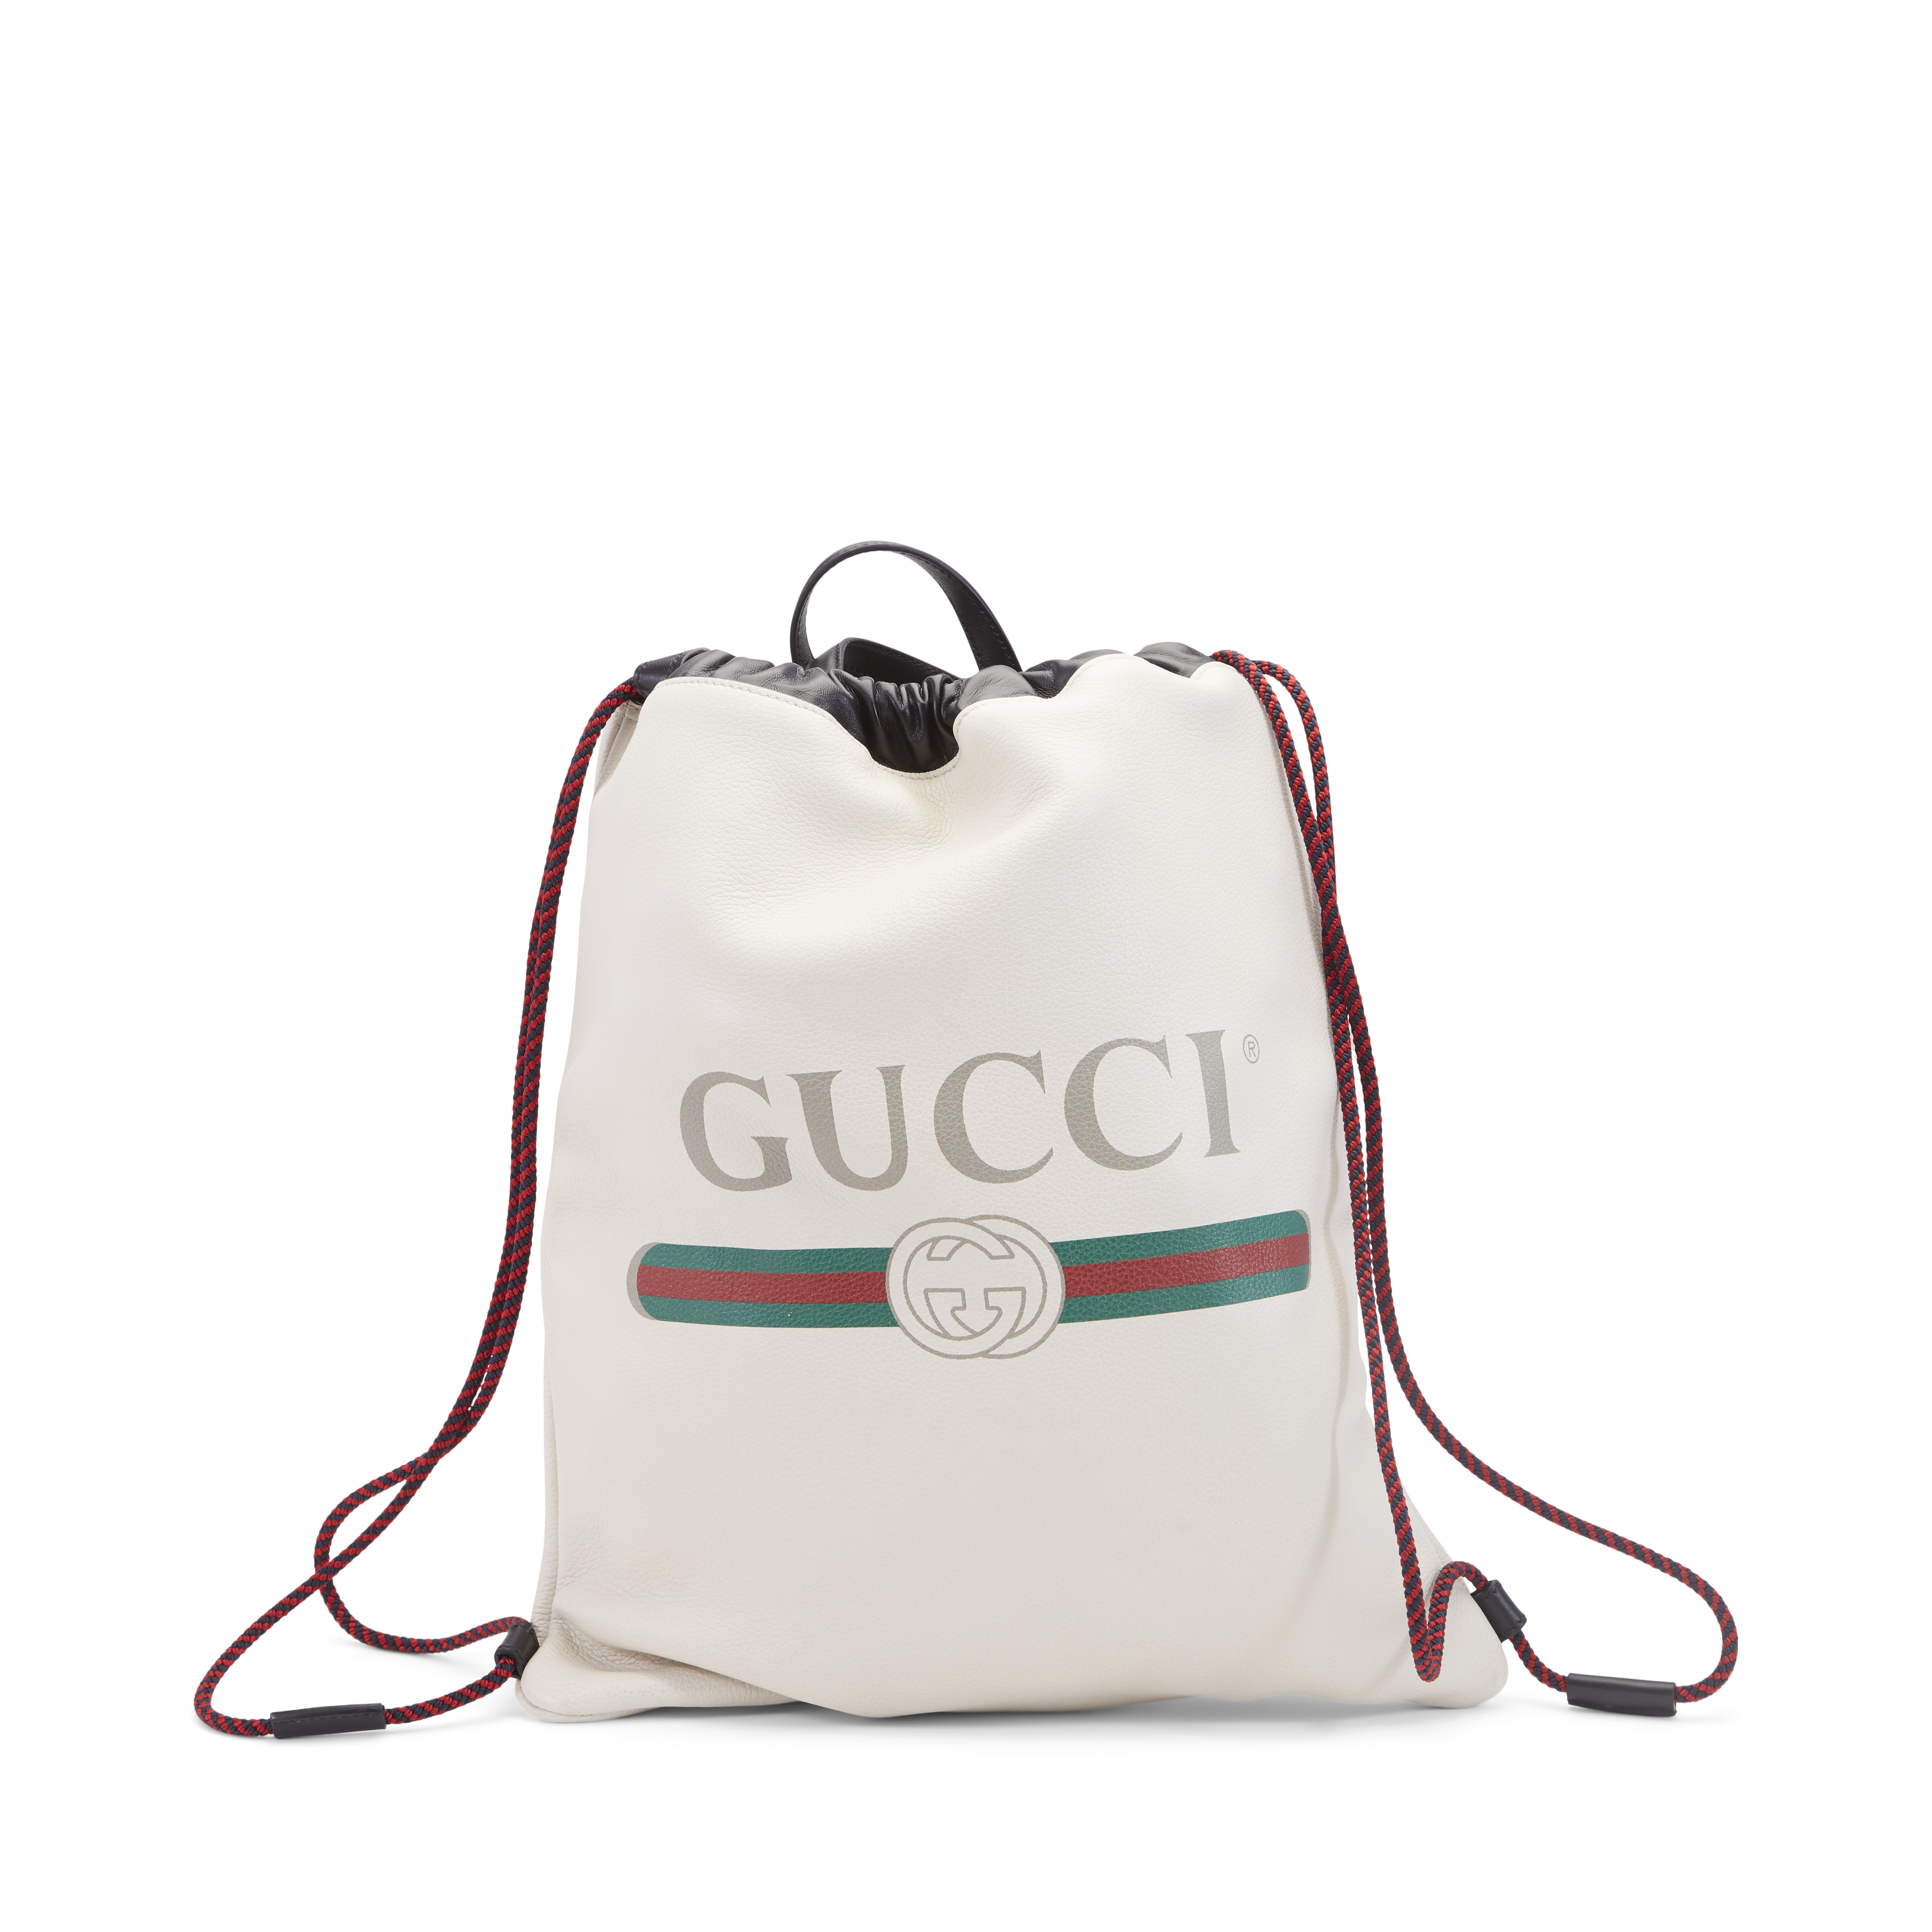 gucci drawstring bag cheap